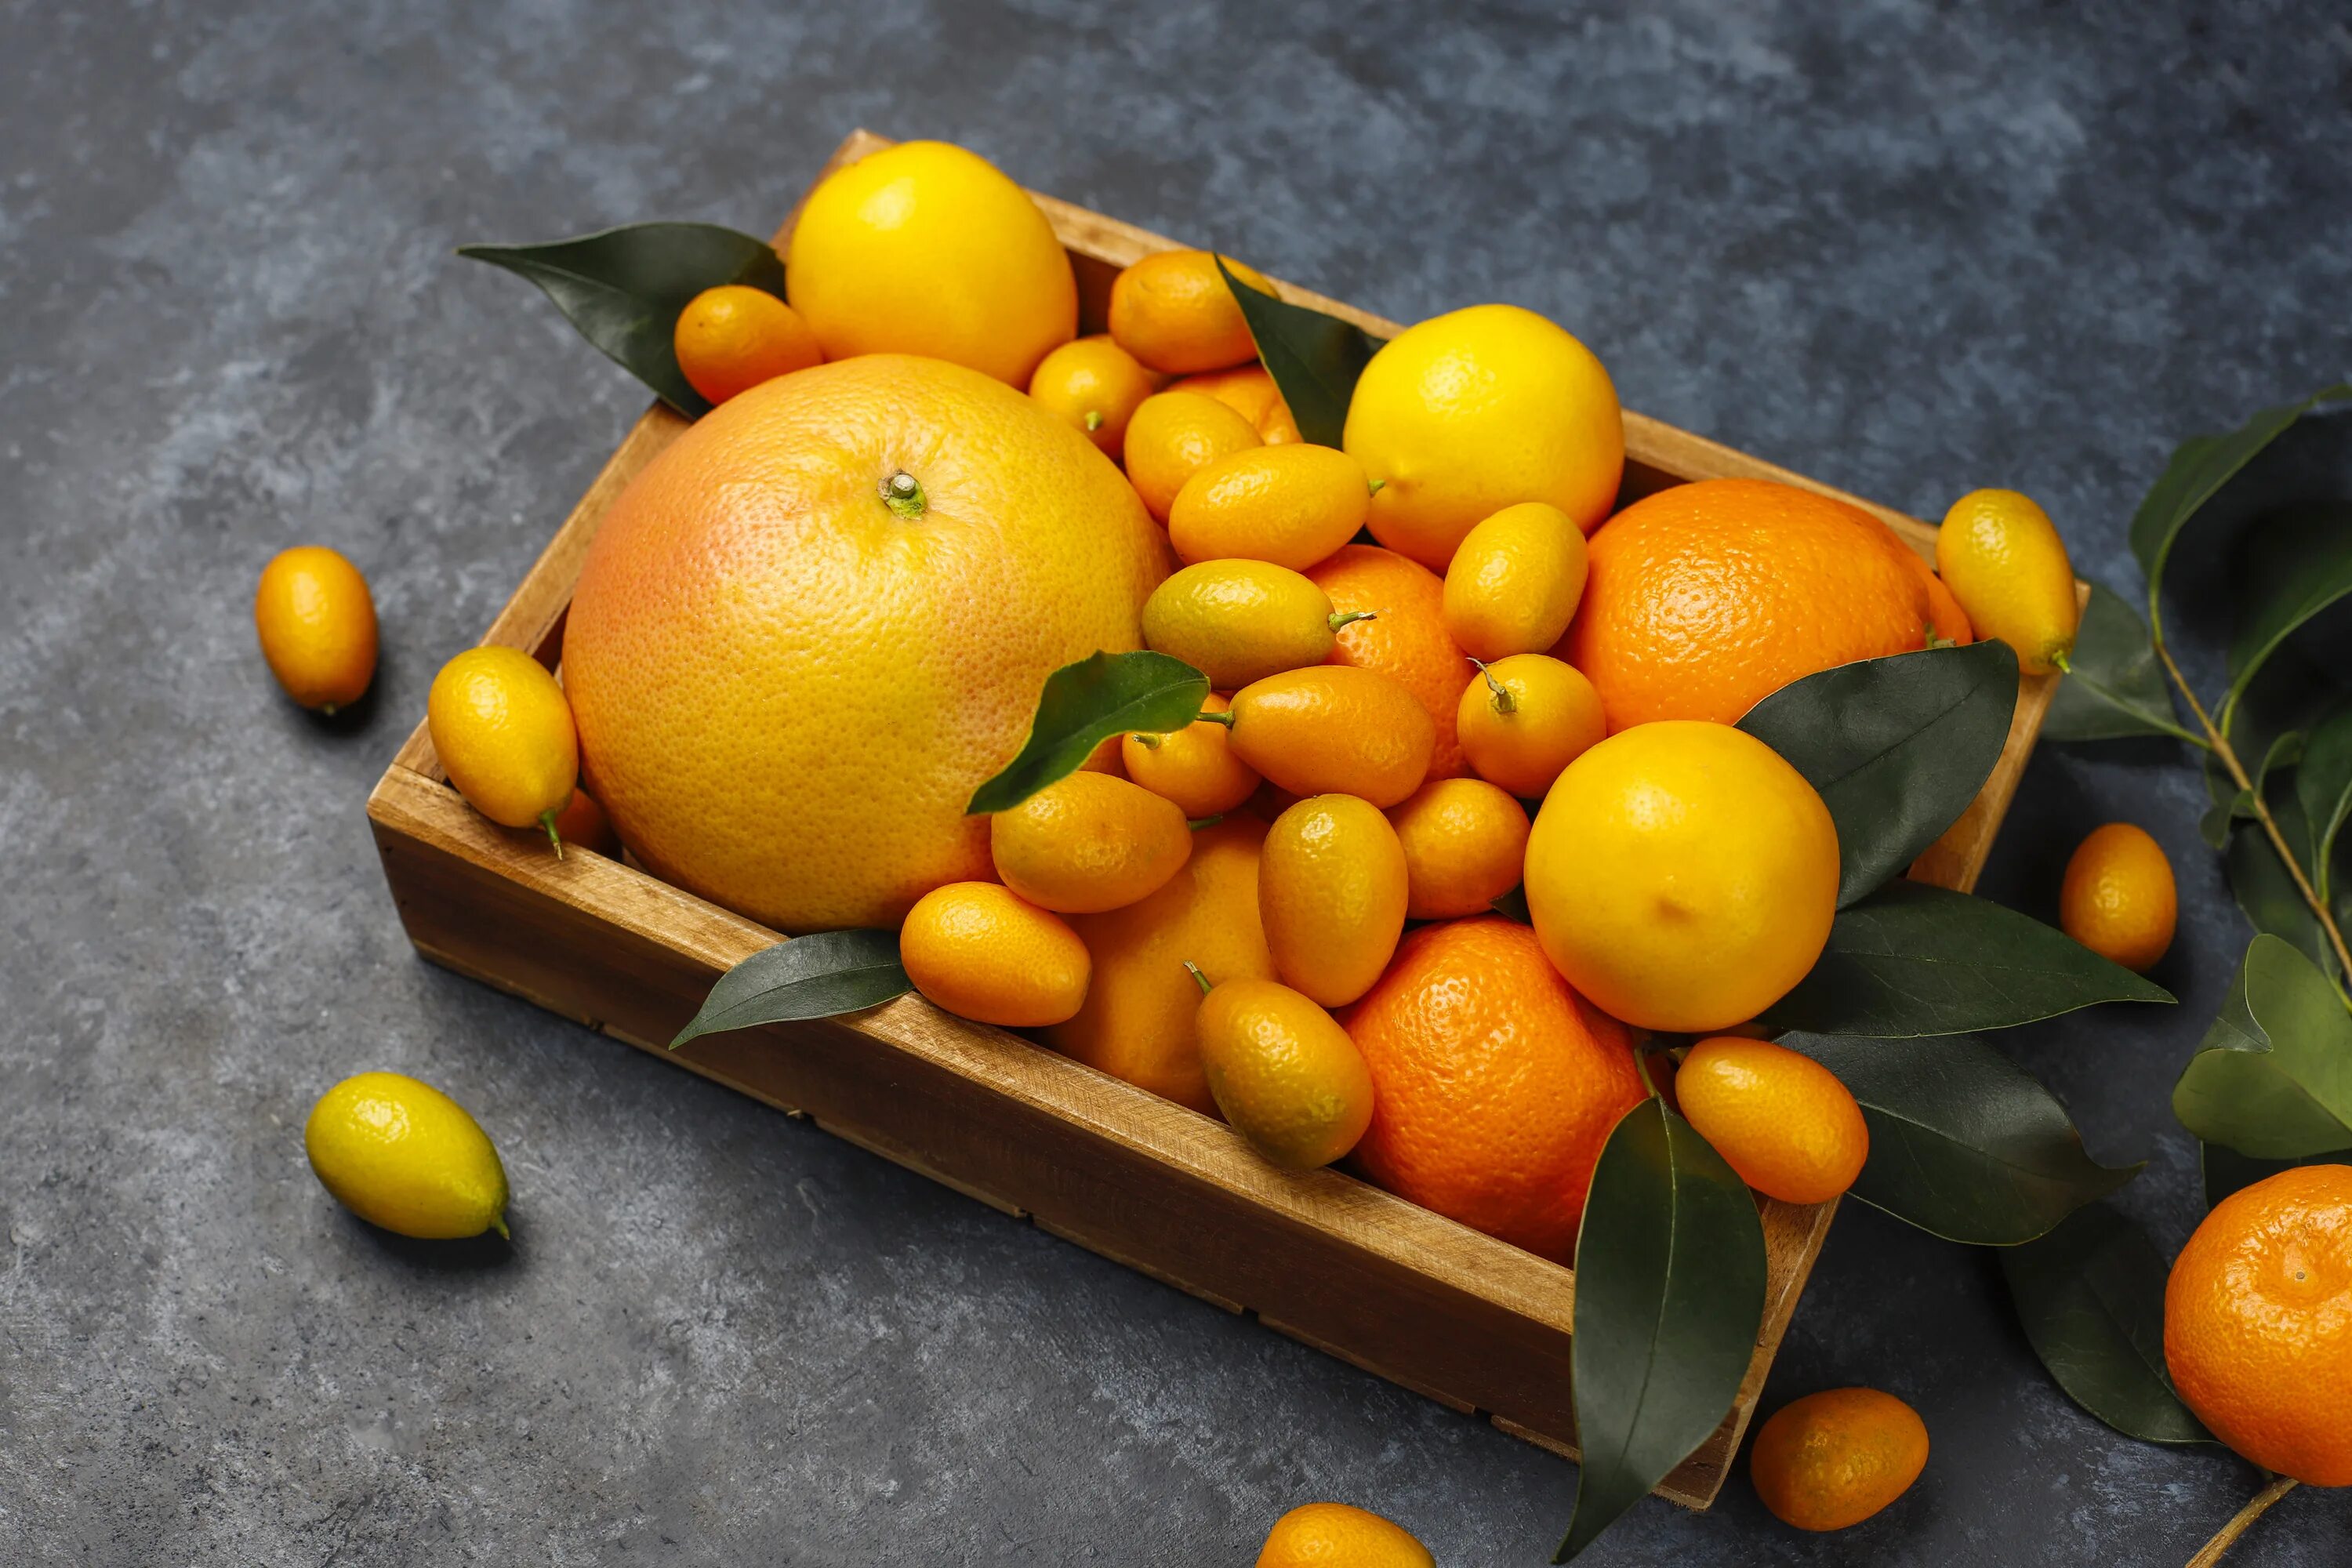 They like oranges. Цитрус кумкват. Кумкват цитрусовые. Кумкват лимон. Кумкват апельсин.